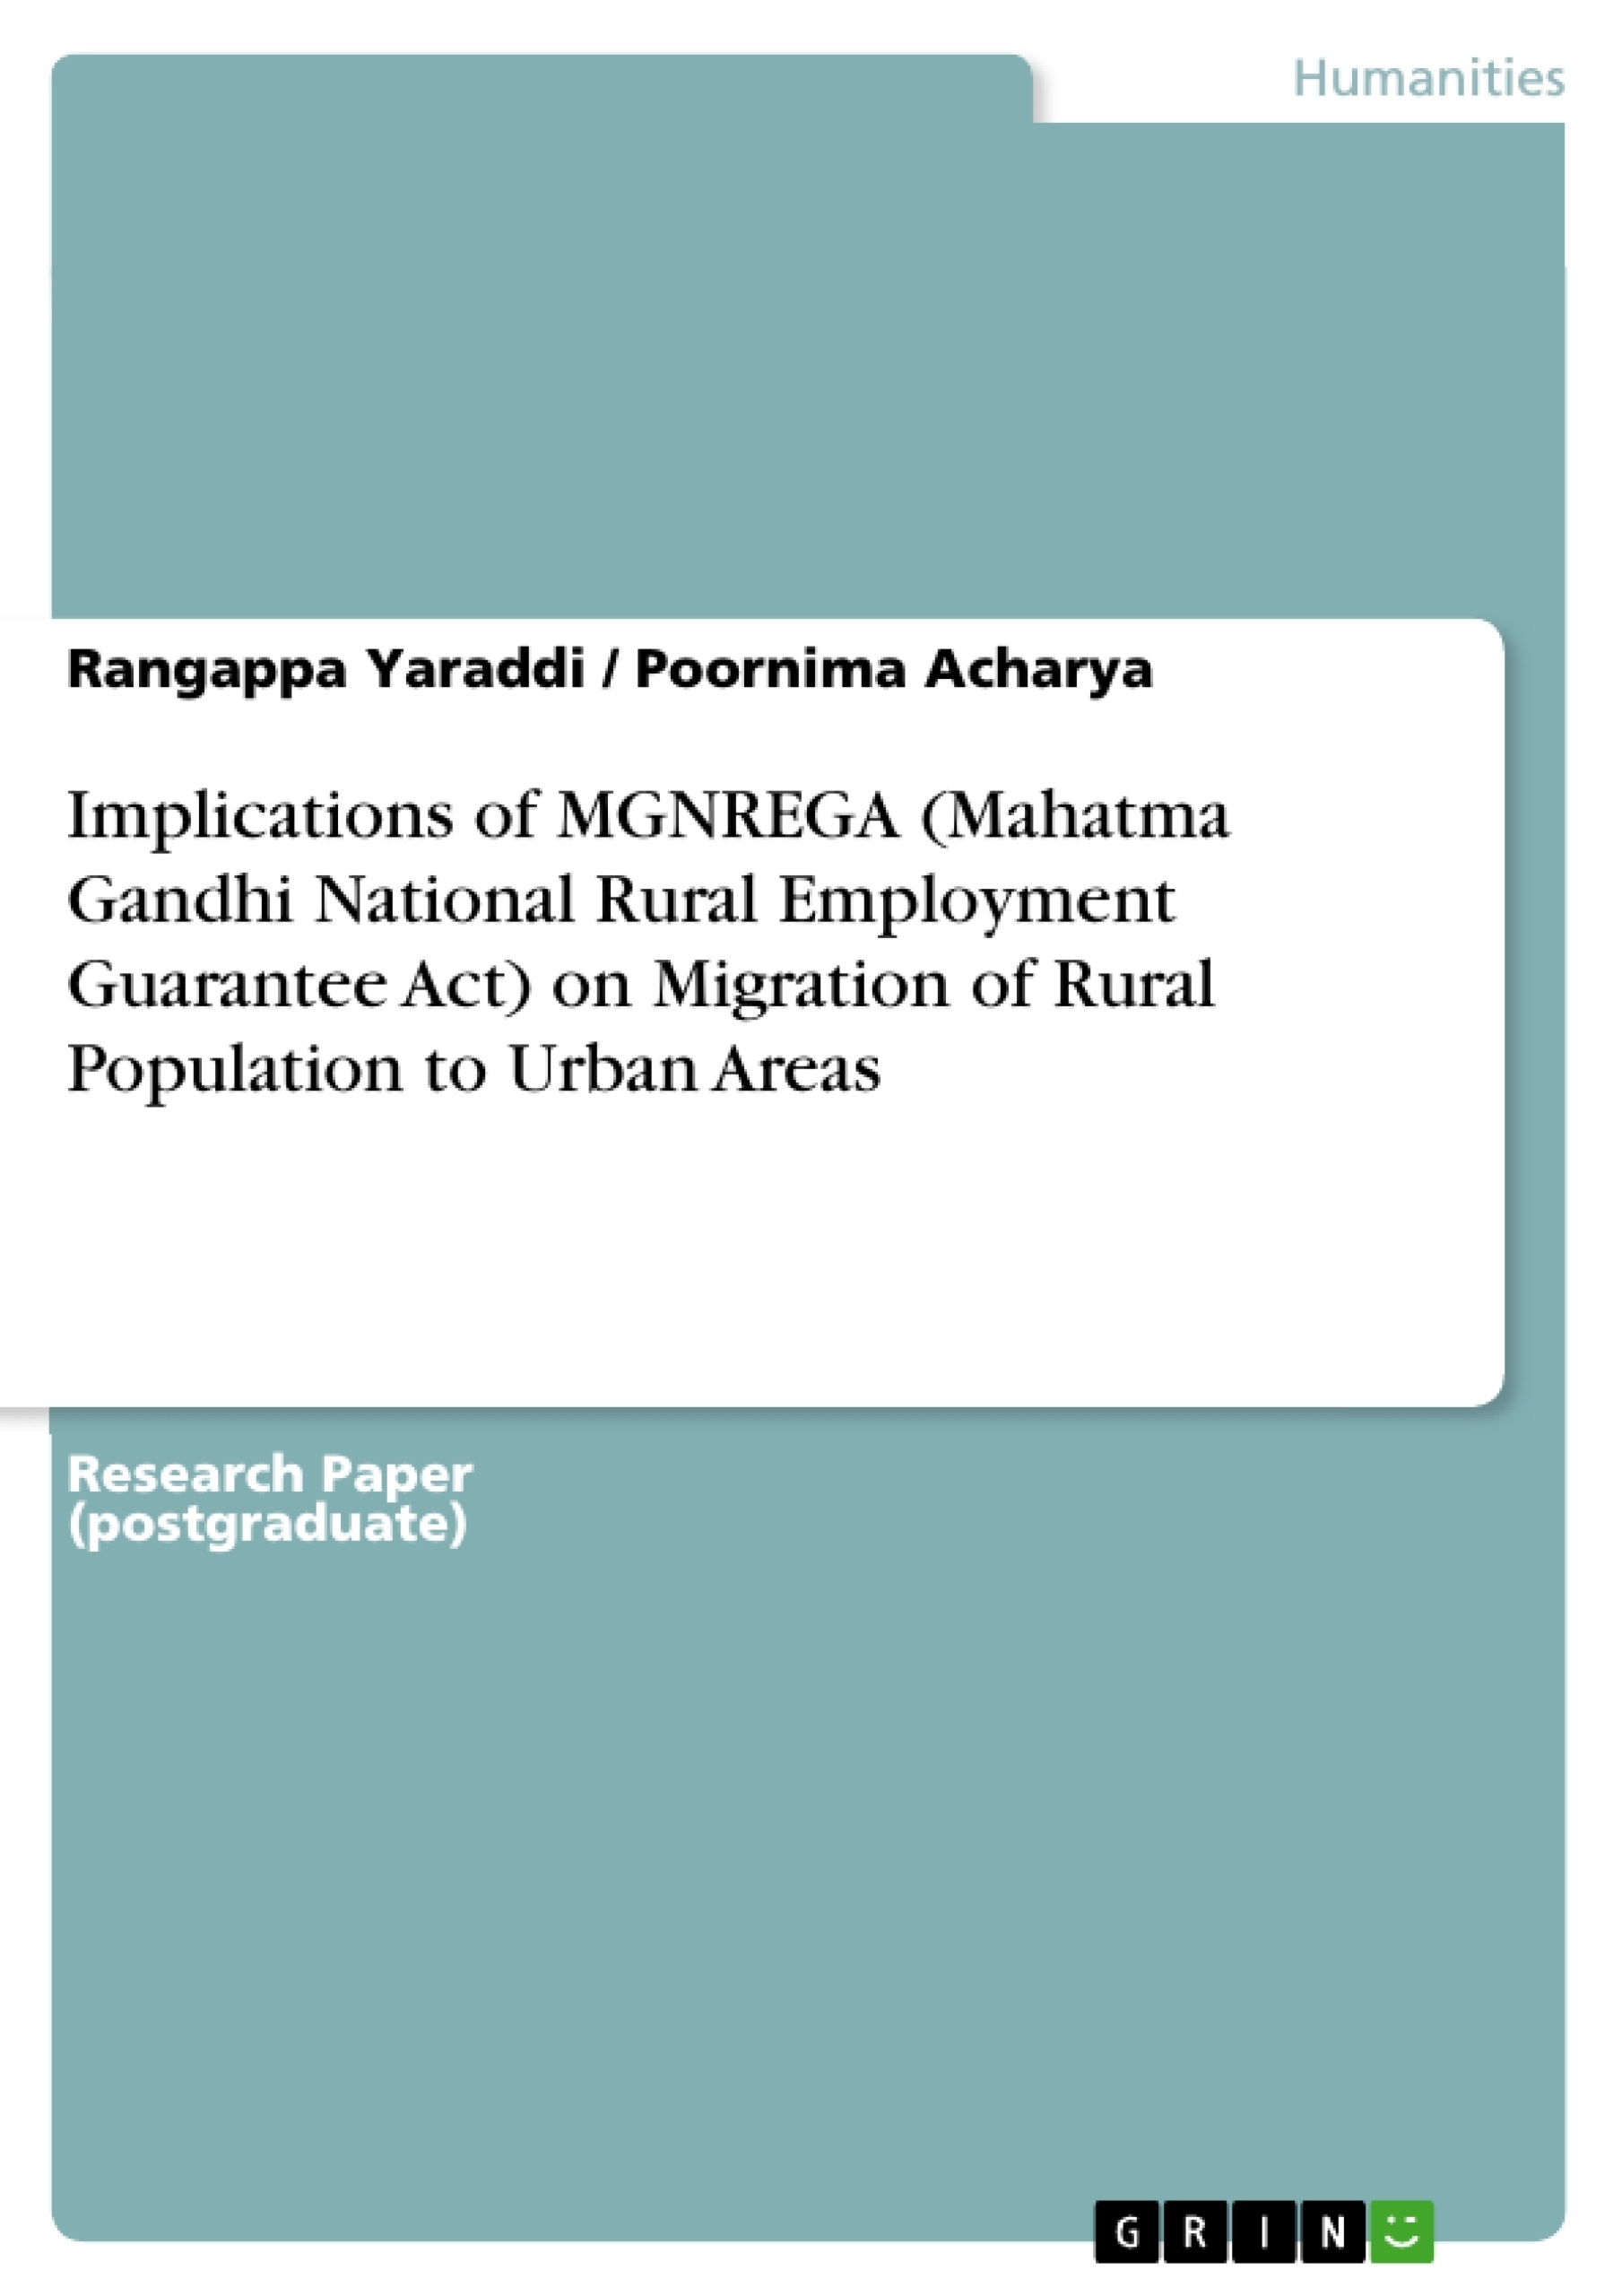 Titre: Implications of MGNREGA (Mahatma Gandhi National Rural Employment Guarantee Act) on Migration of Rural Population to Urban Areas